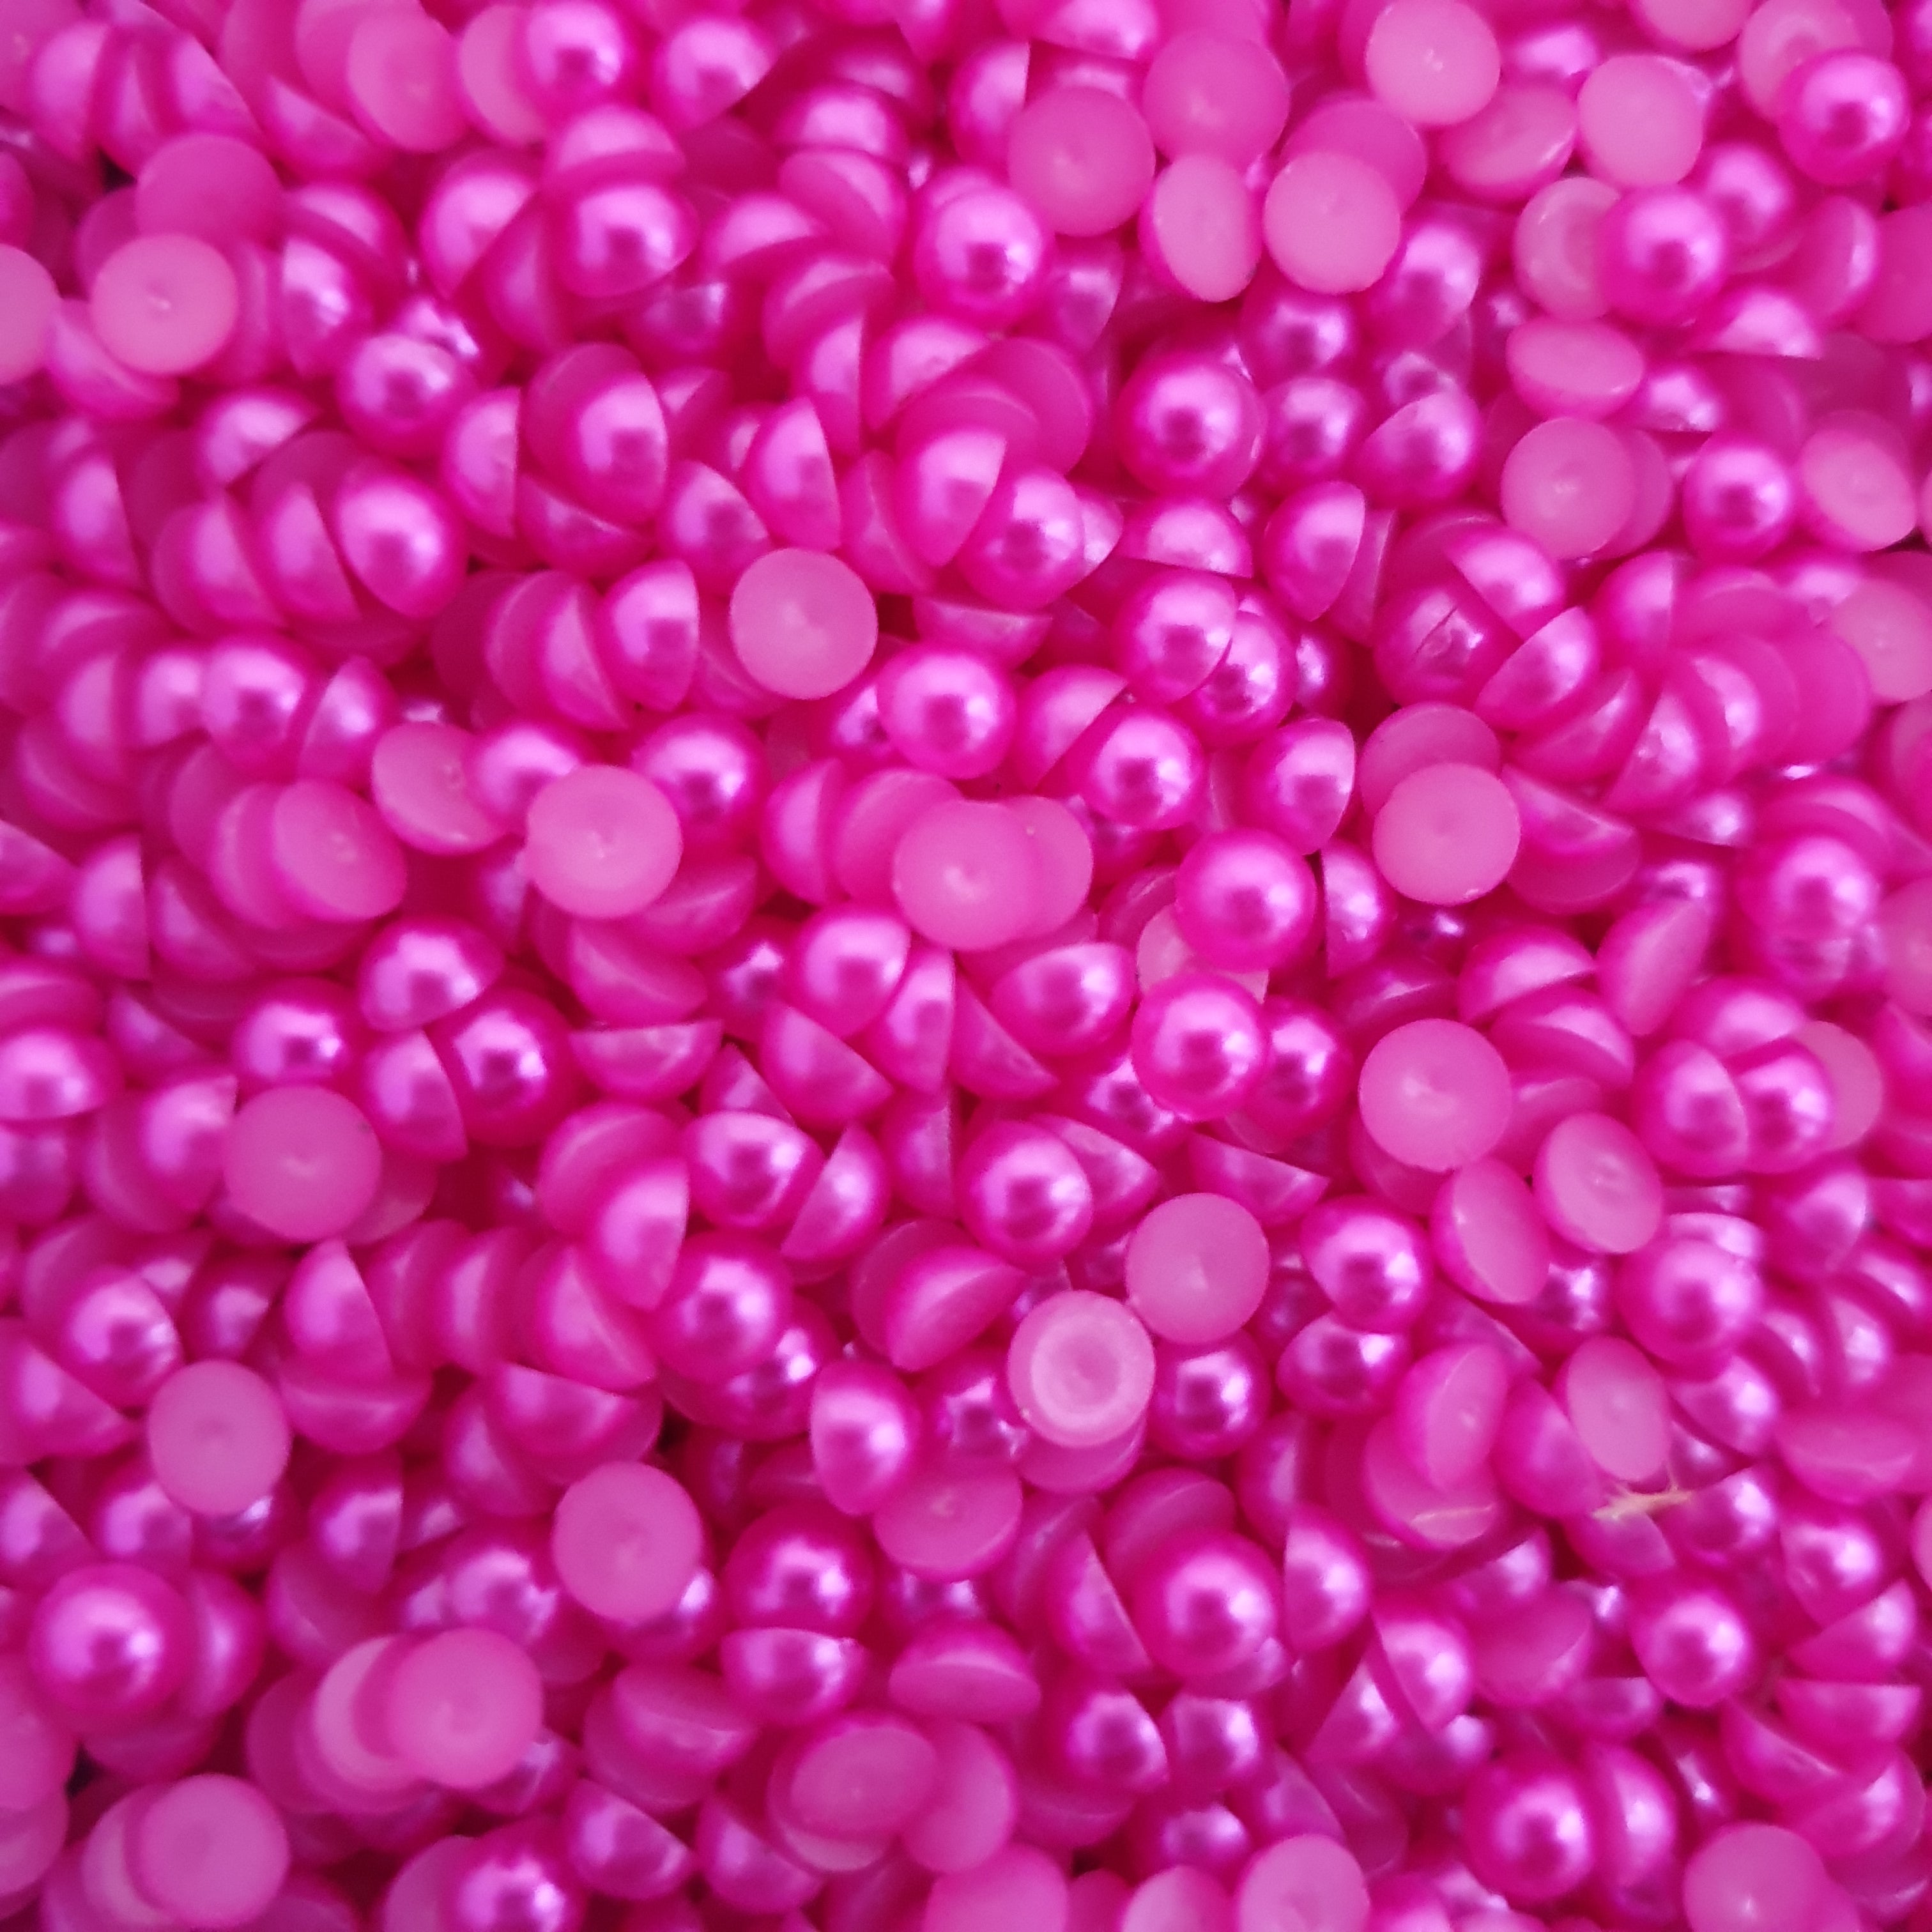 MajorCrafts Dark Pink Flat Back Half Round Resin Embellishment Pearls C21